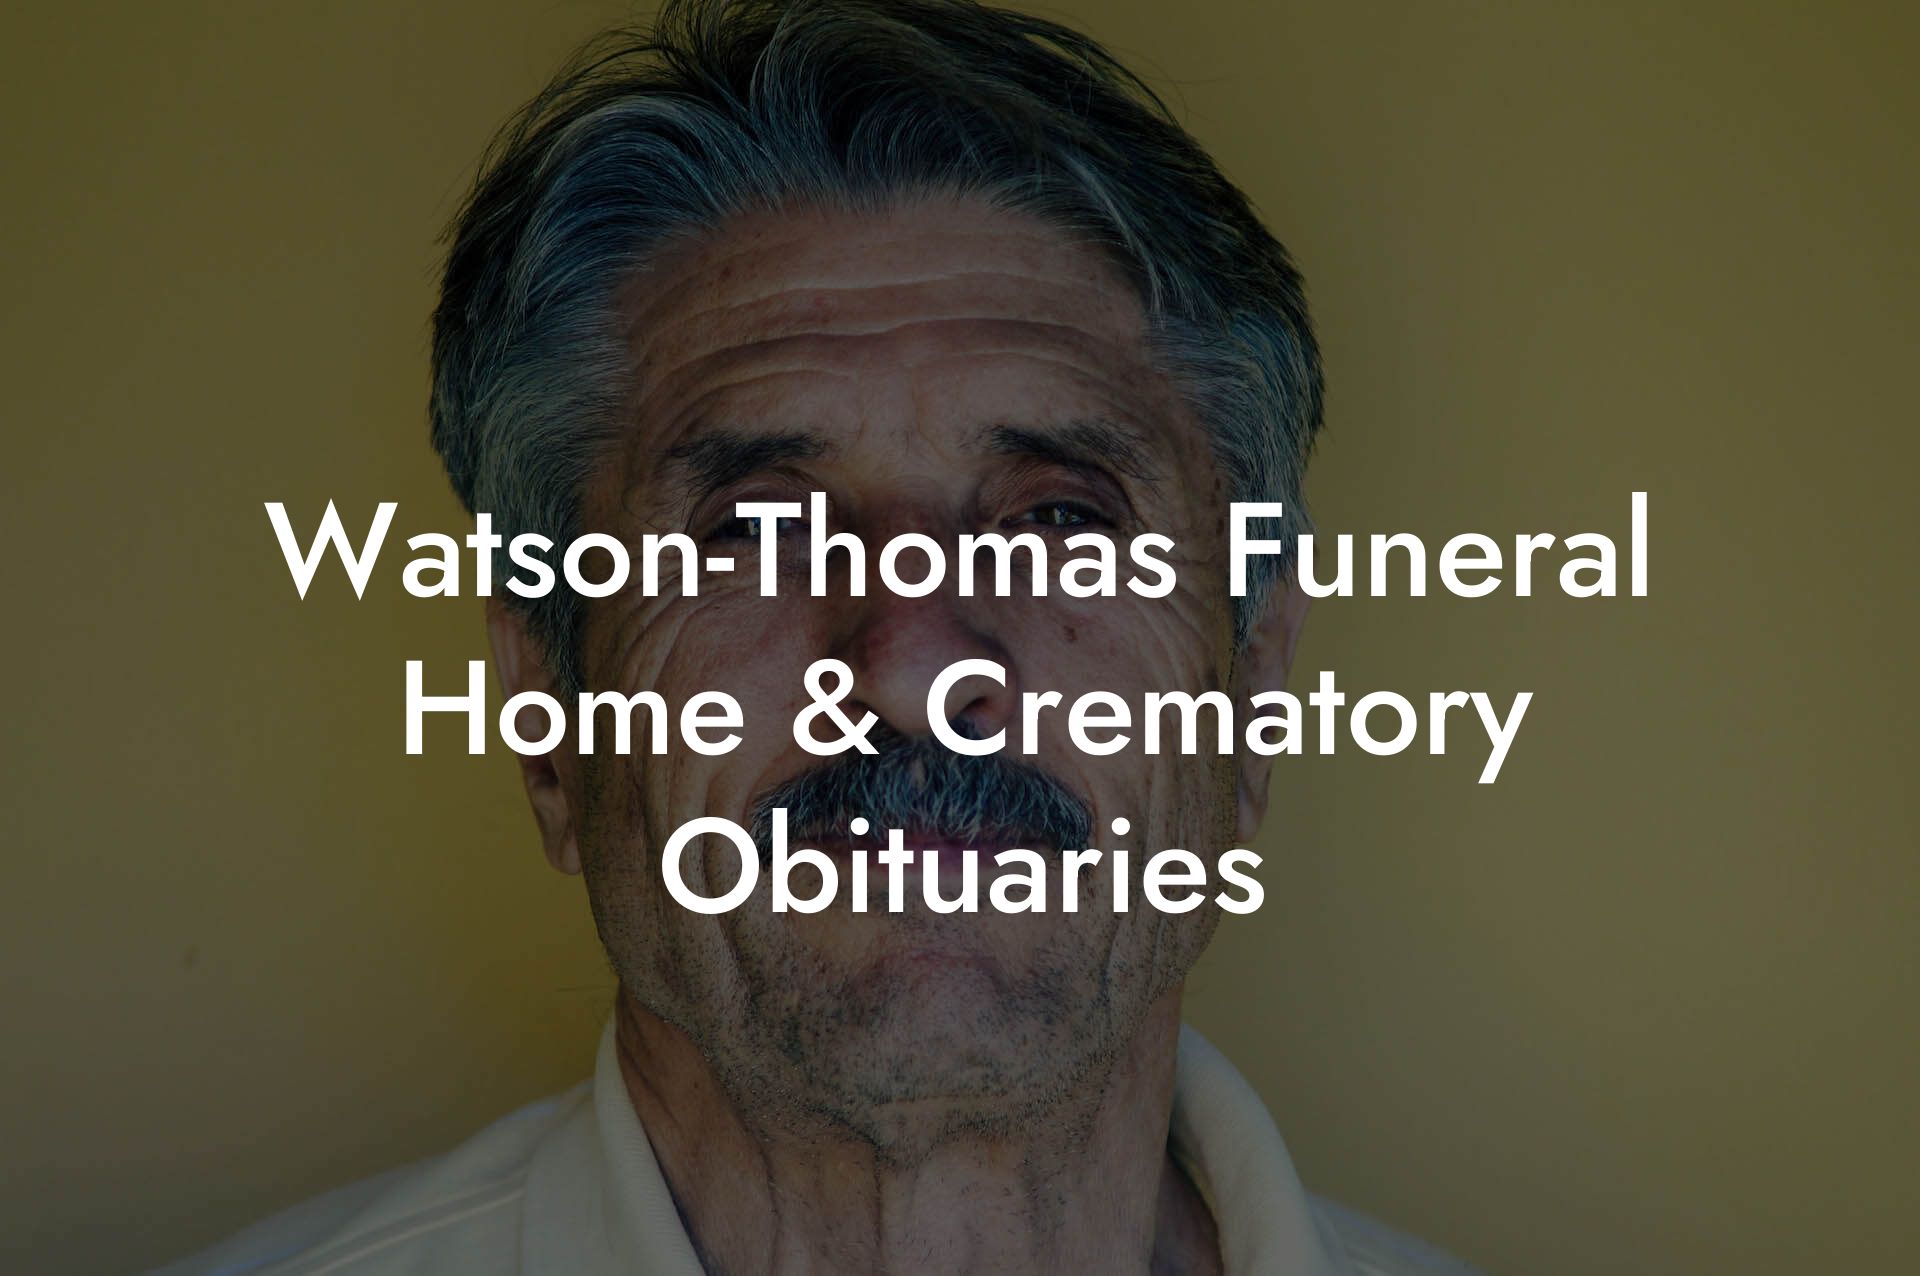 Watson-Thomas Funeral Home & Crematory Obituaries